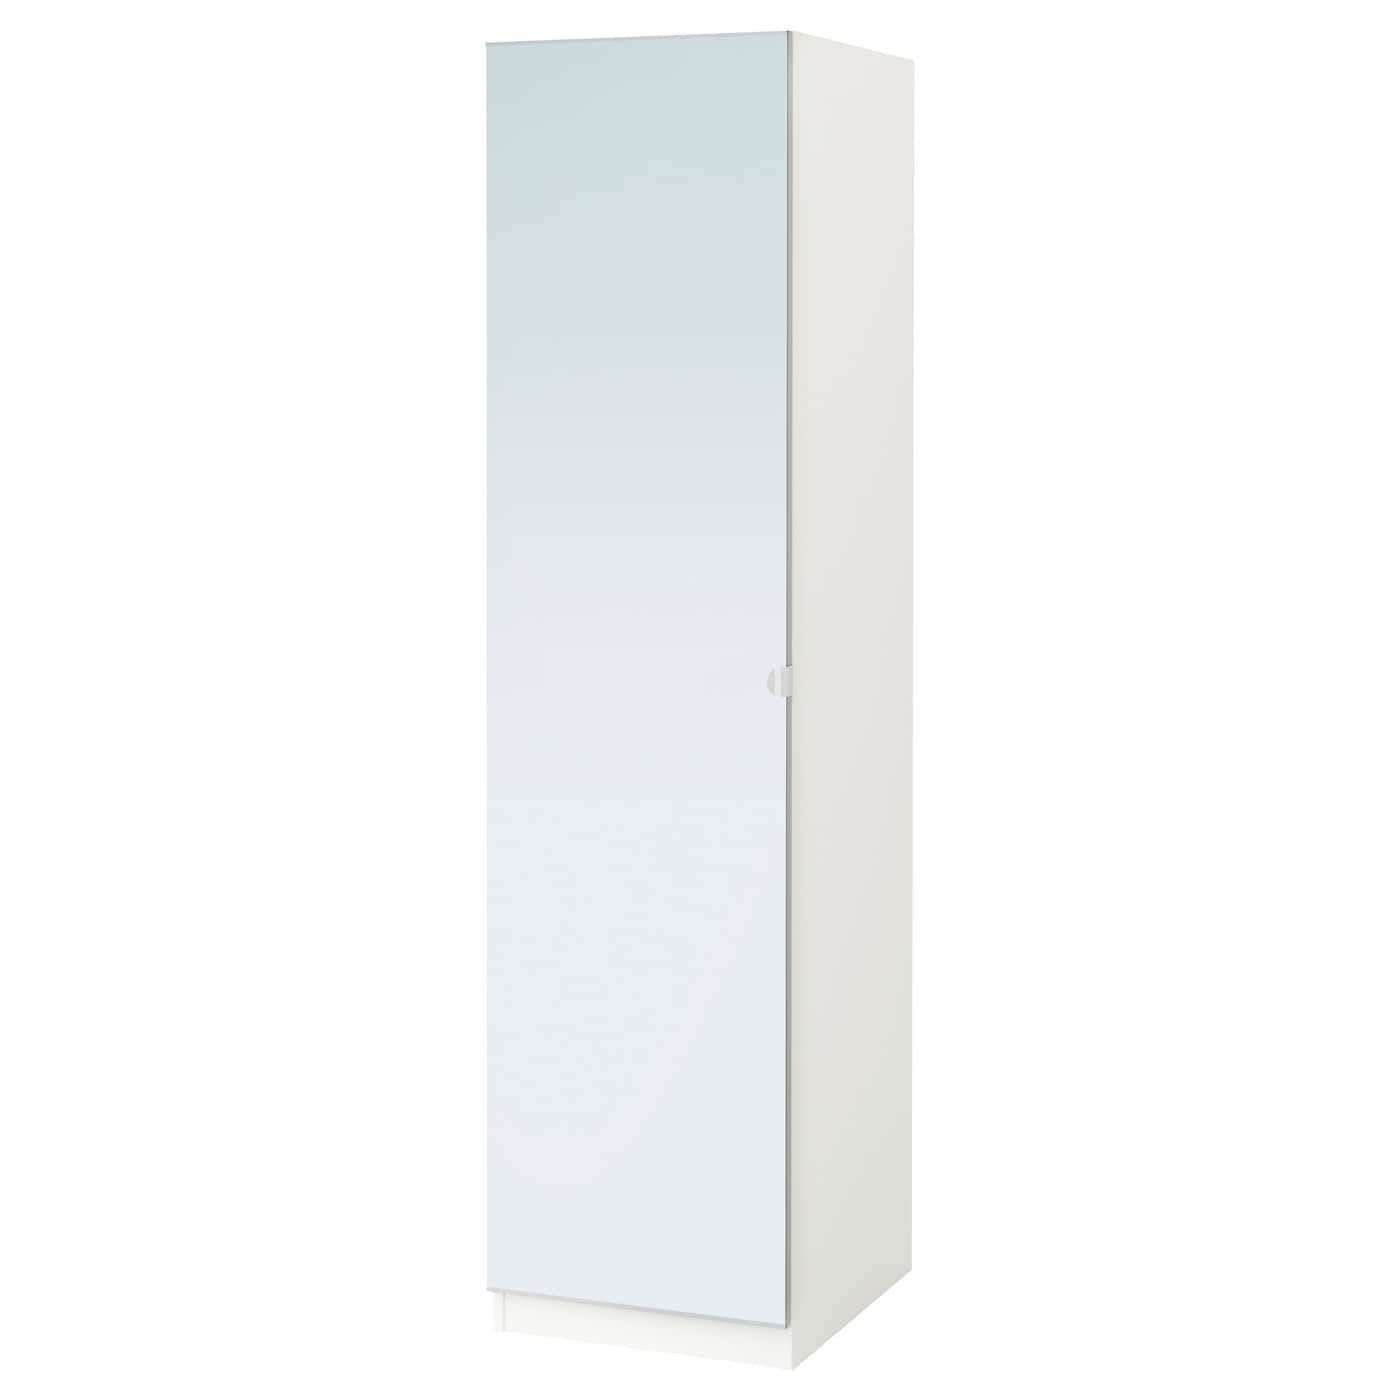 Pax Wardrobe, White/vikedal Mirror Glass, 50x60x201 Cm – Ikea Inside Single Wardrobes With Mirror (View 8 of 15)